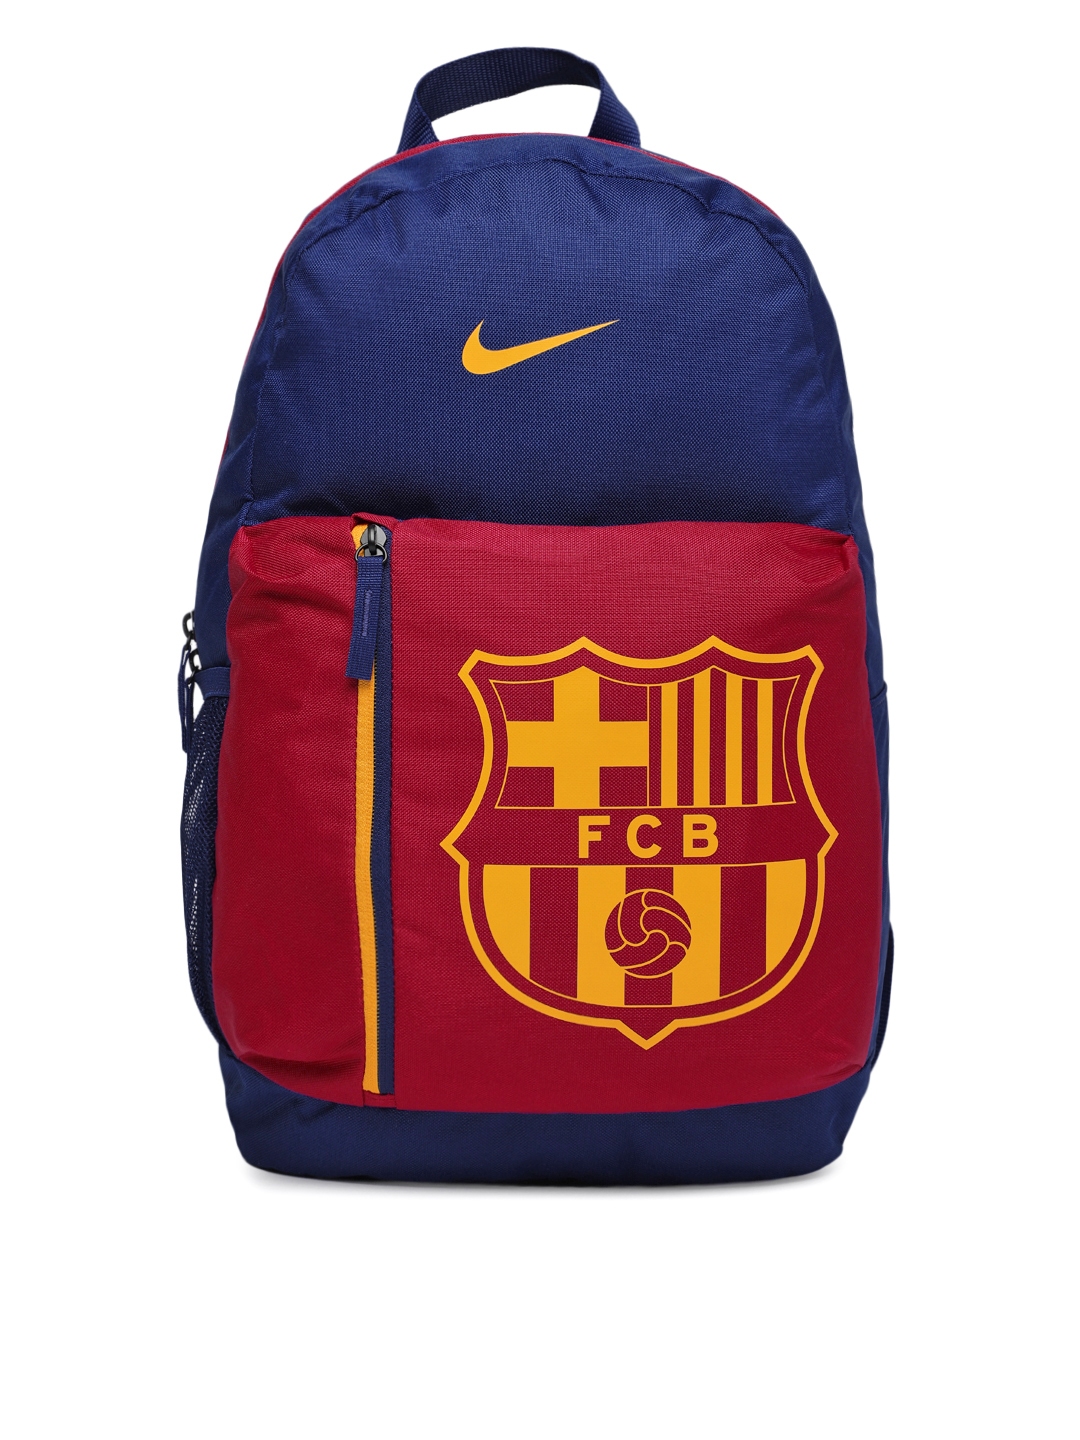 Nike FC Barcelona Stadium backpack 451  Sports accessories  Official  archives of Merkandi  Merkandi B2B